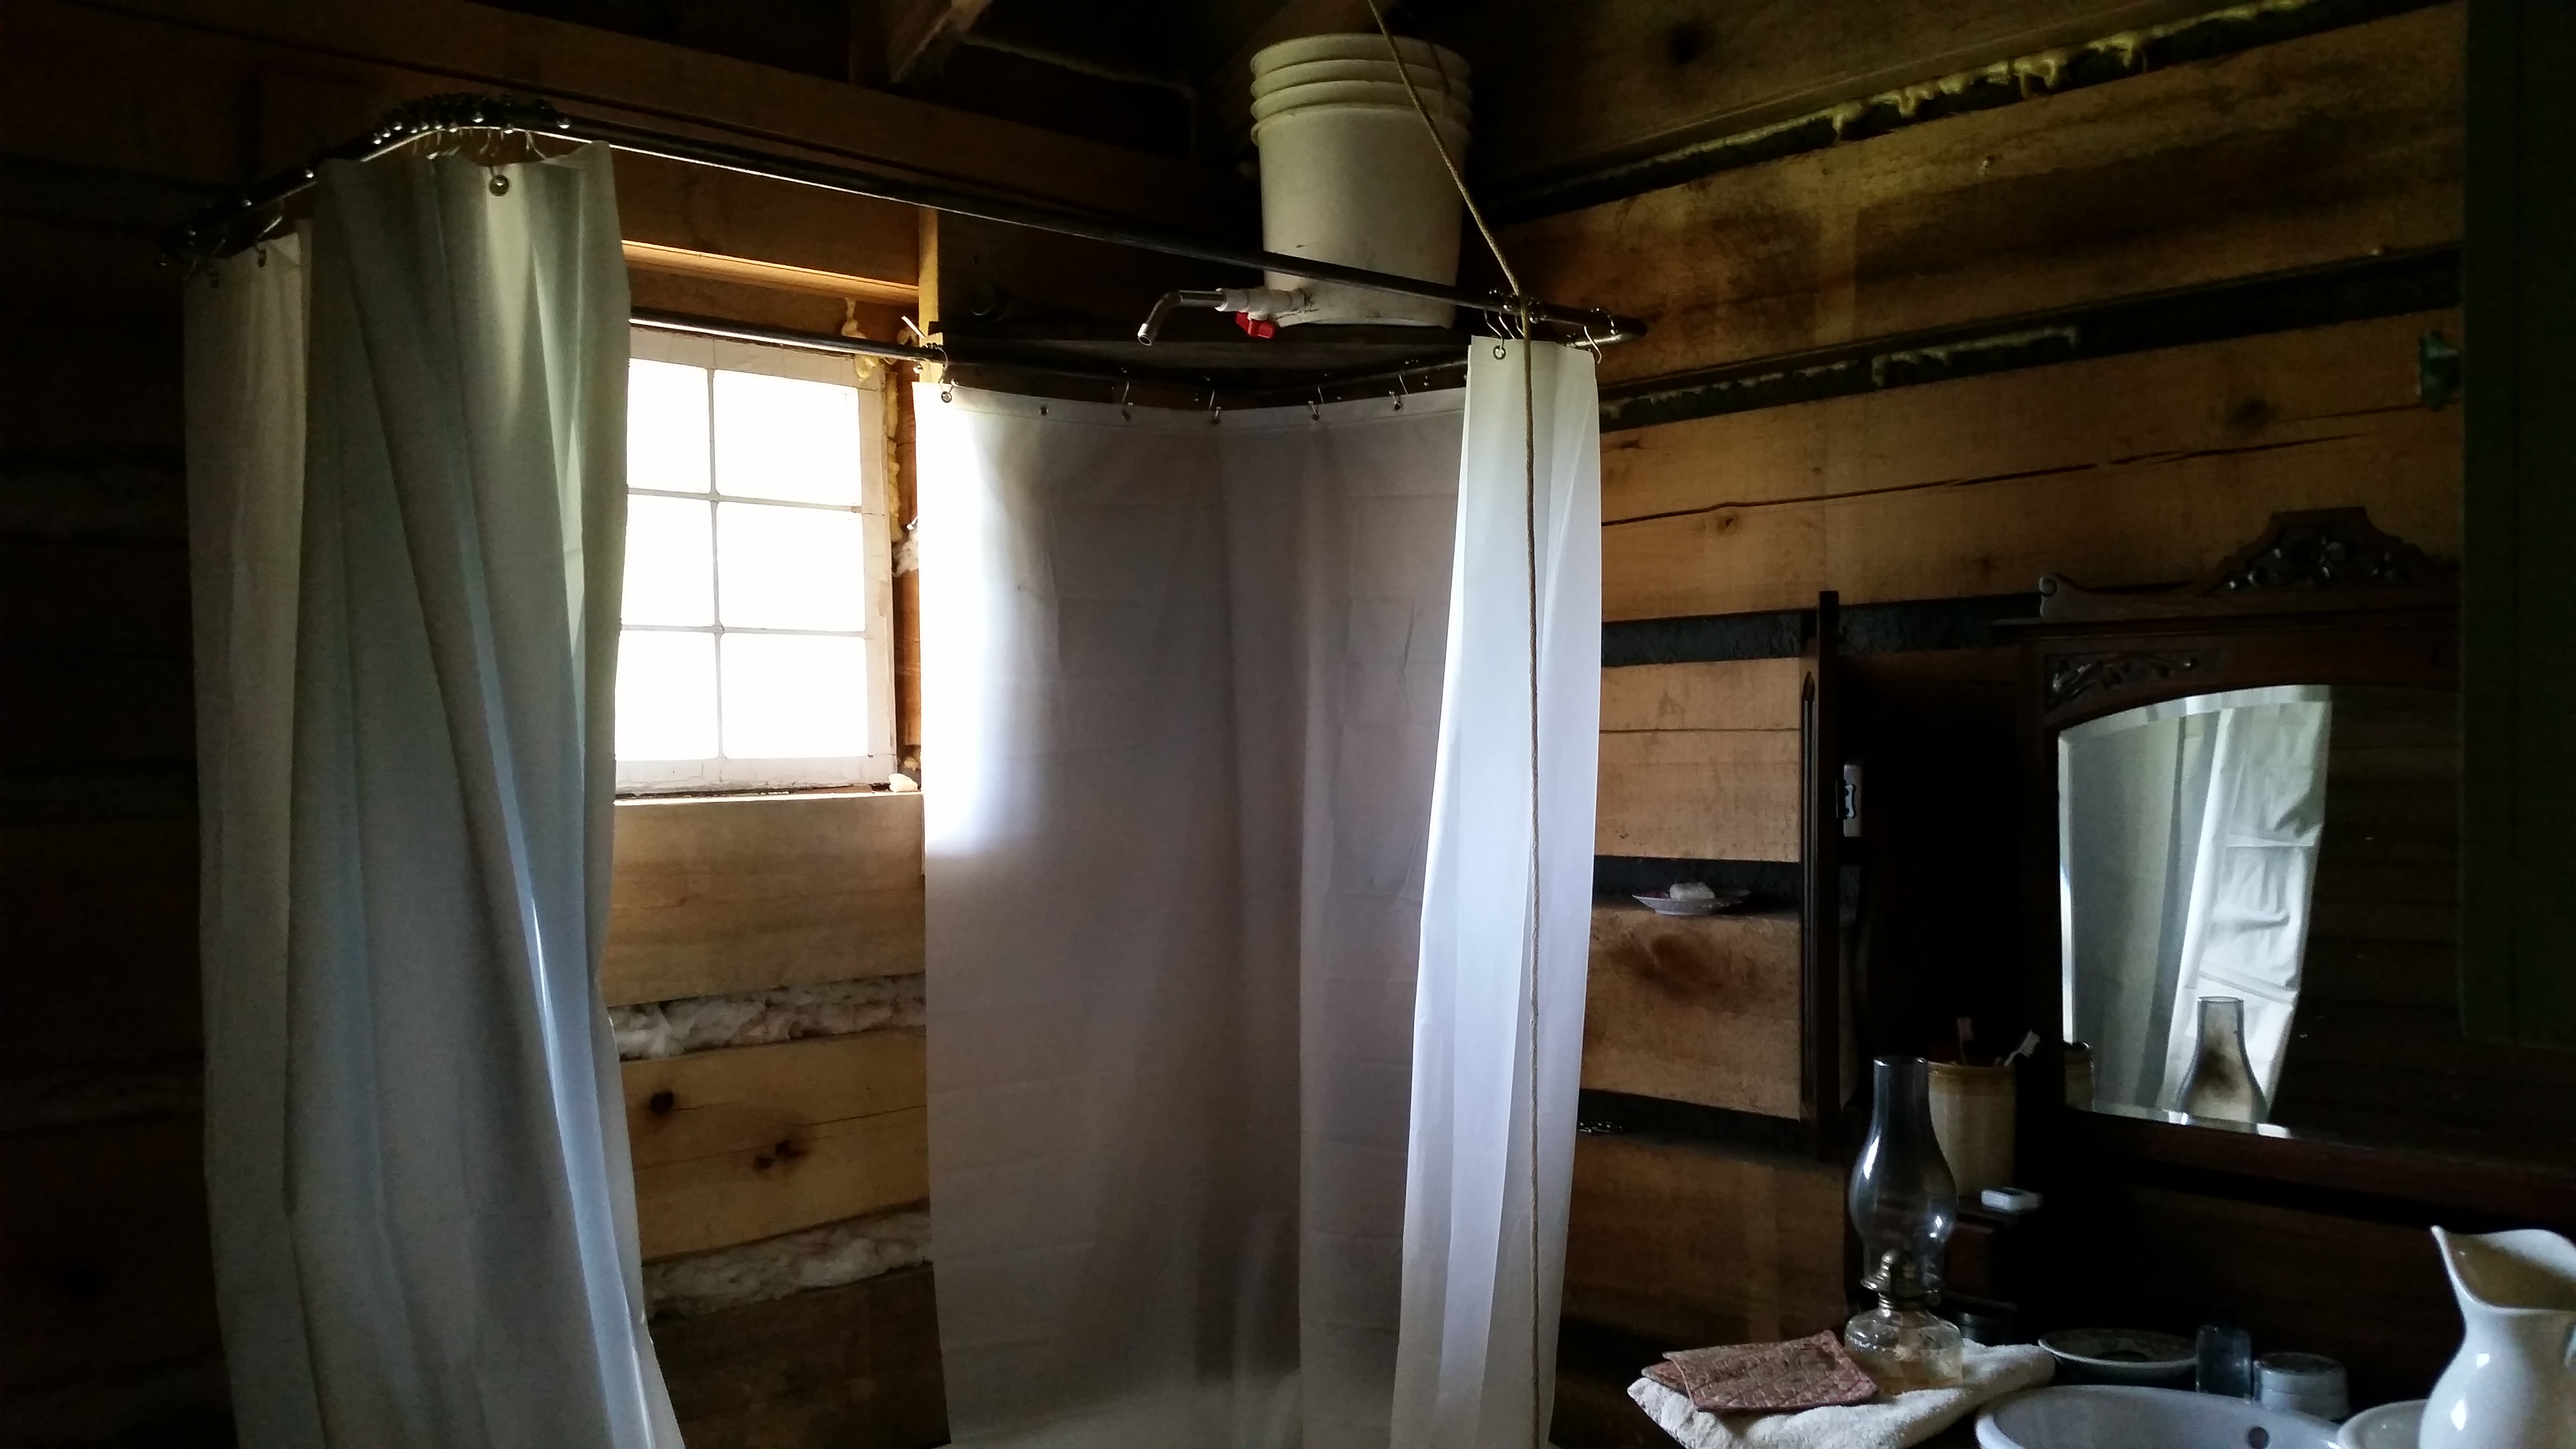 Ever had a bucket shower? #bucketshower #cabin #offgrid #howto